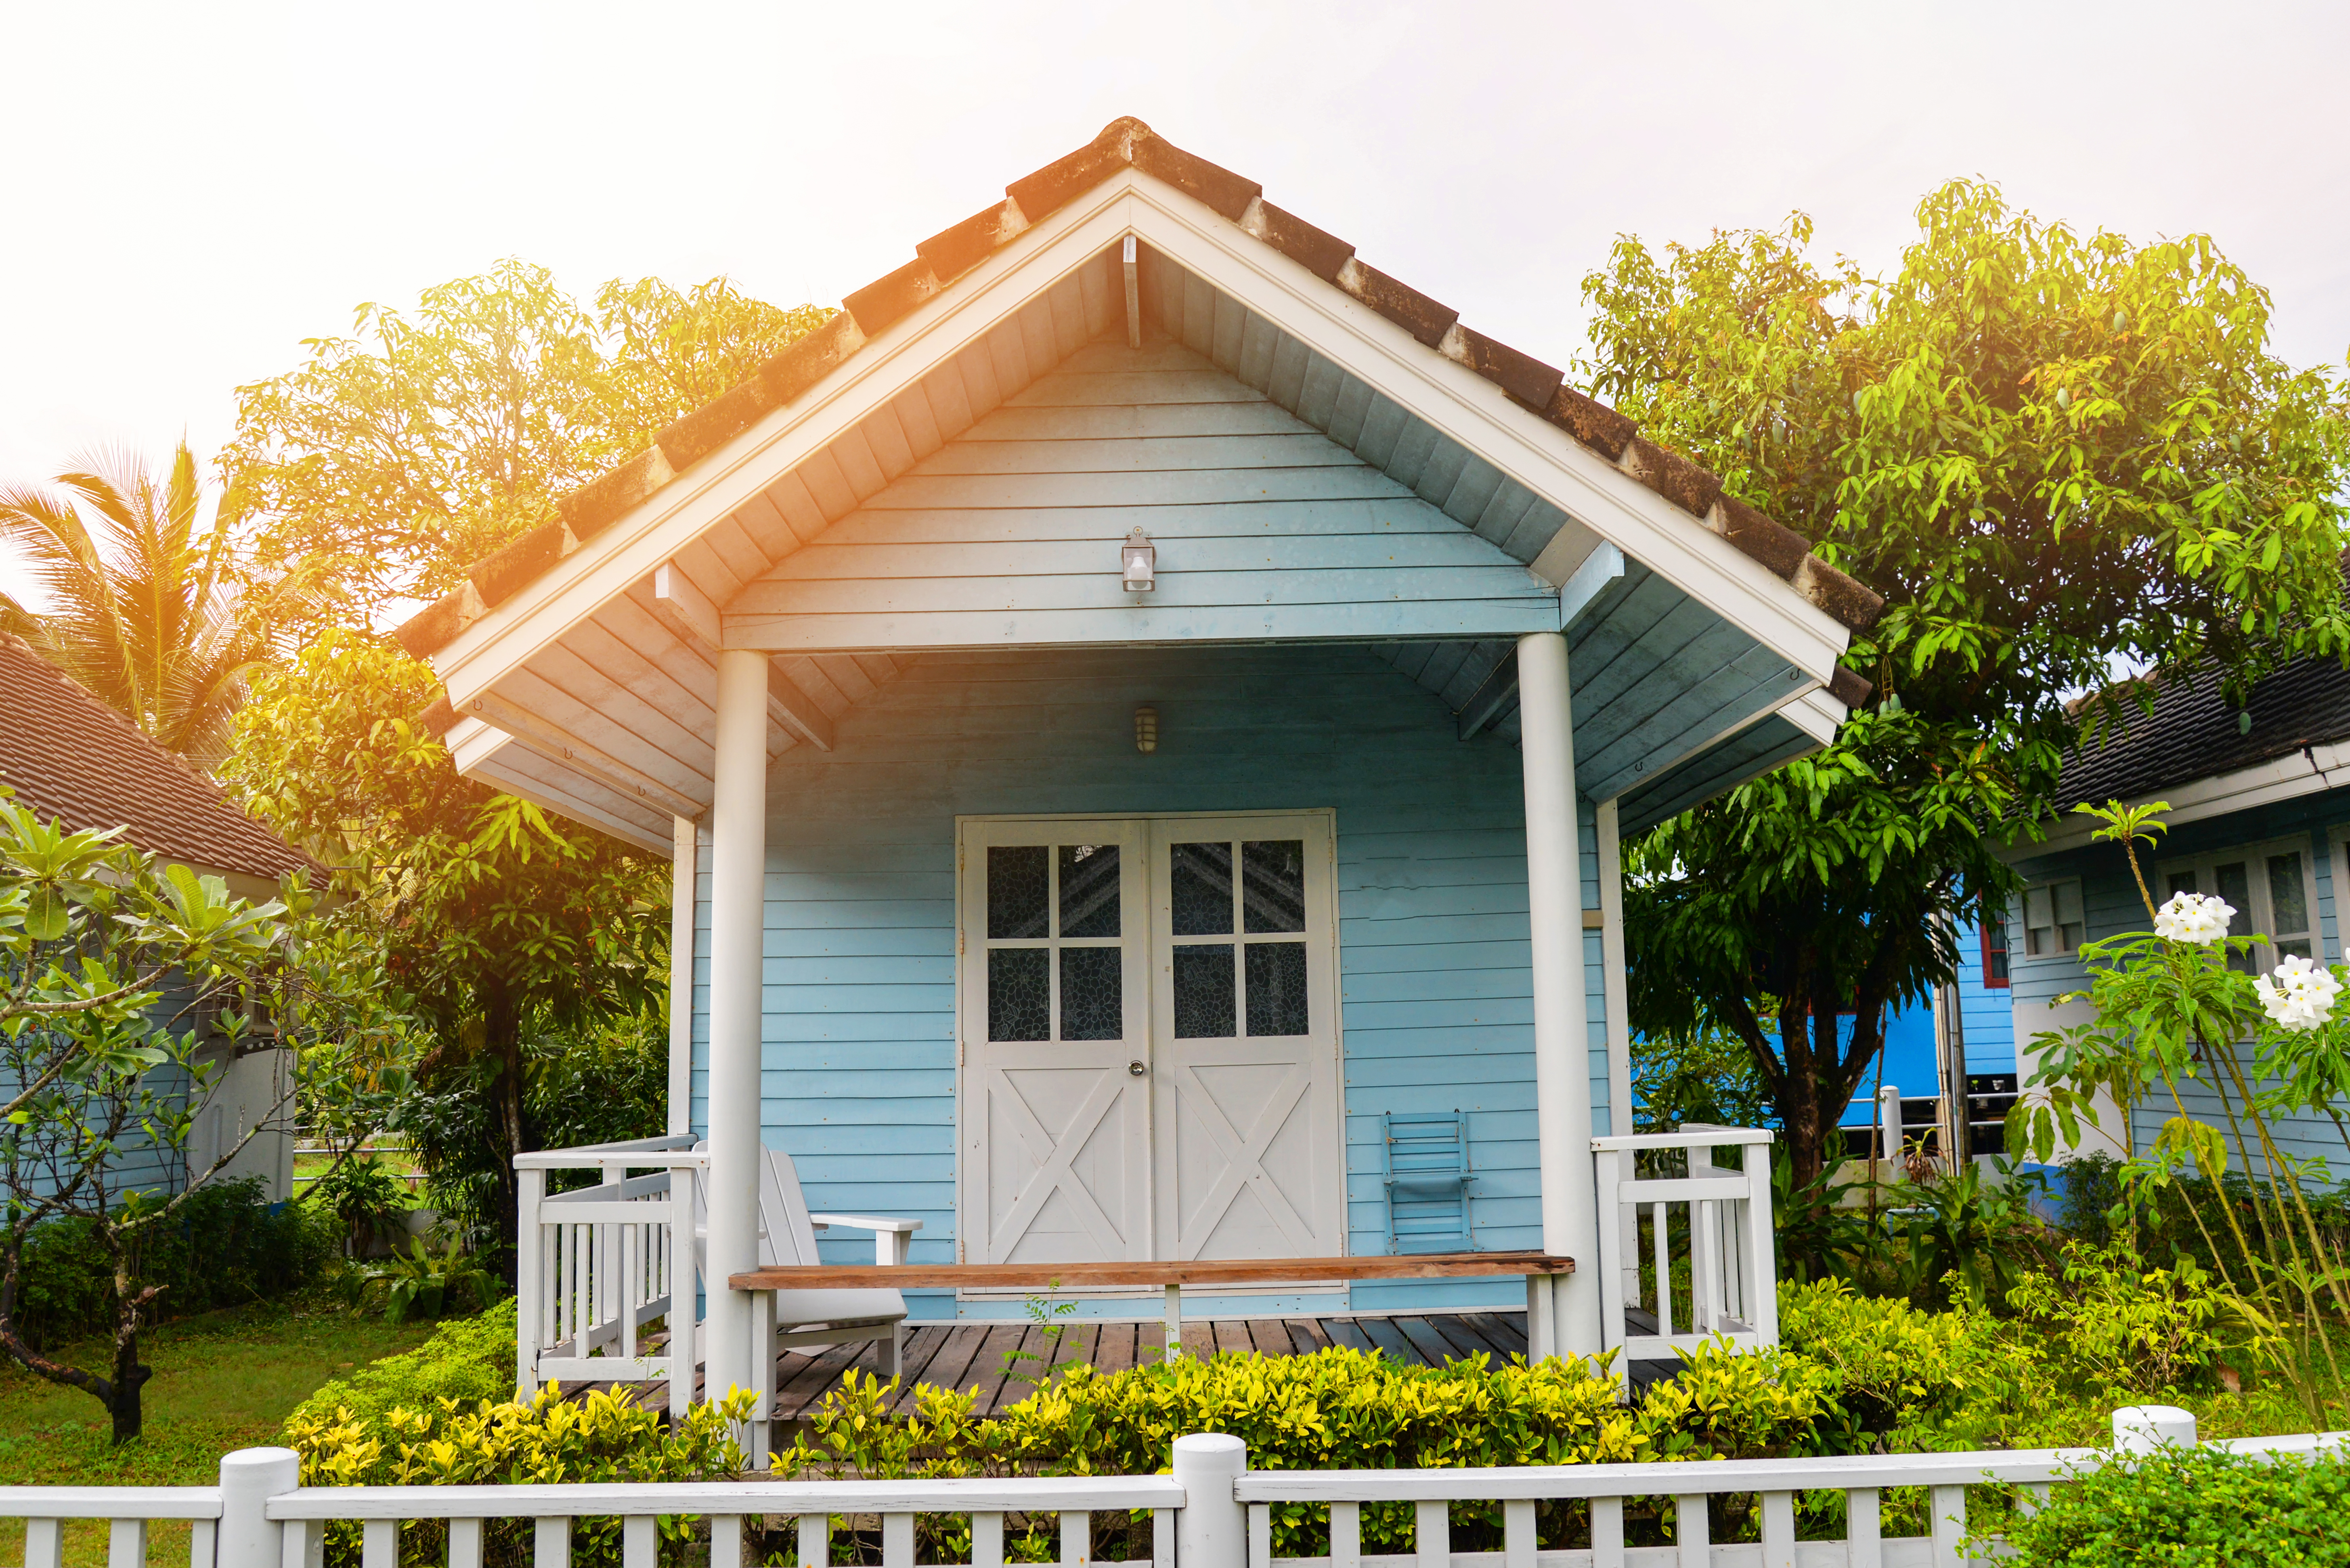 Little house | Source: Shutterstock